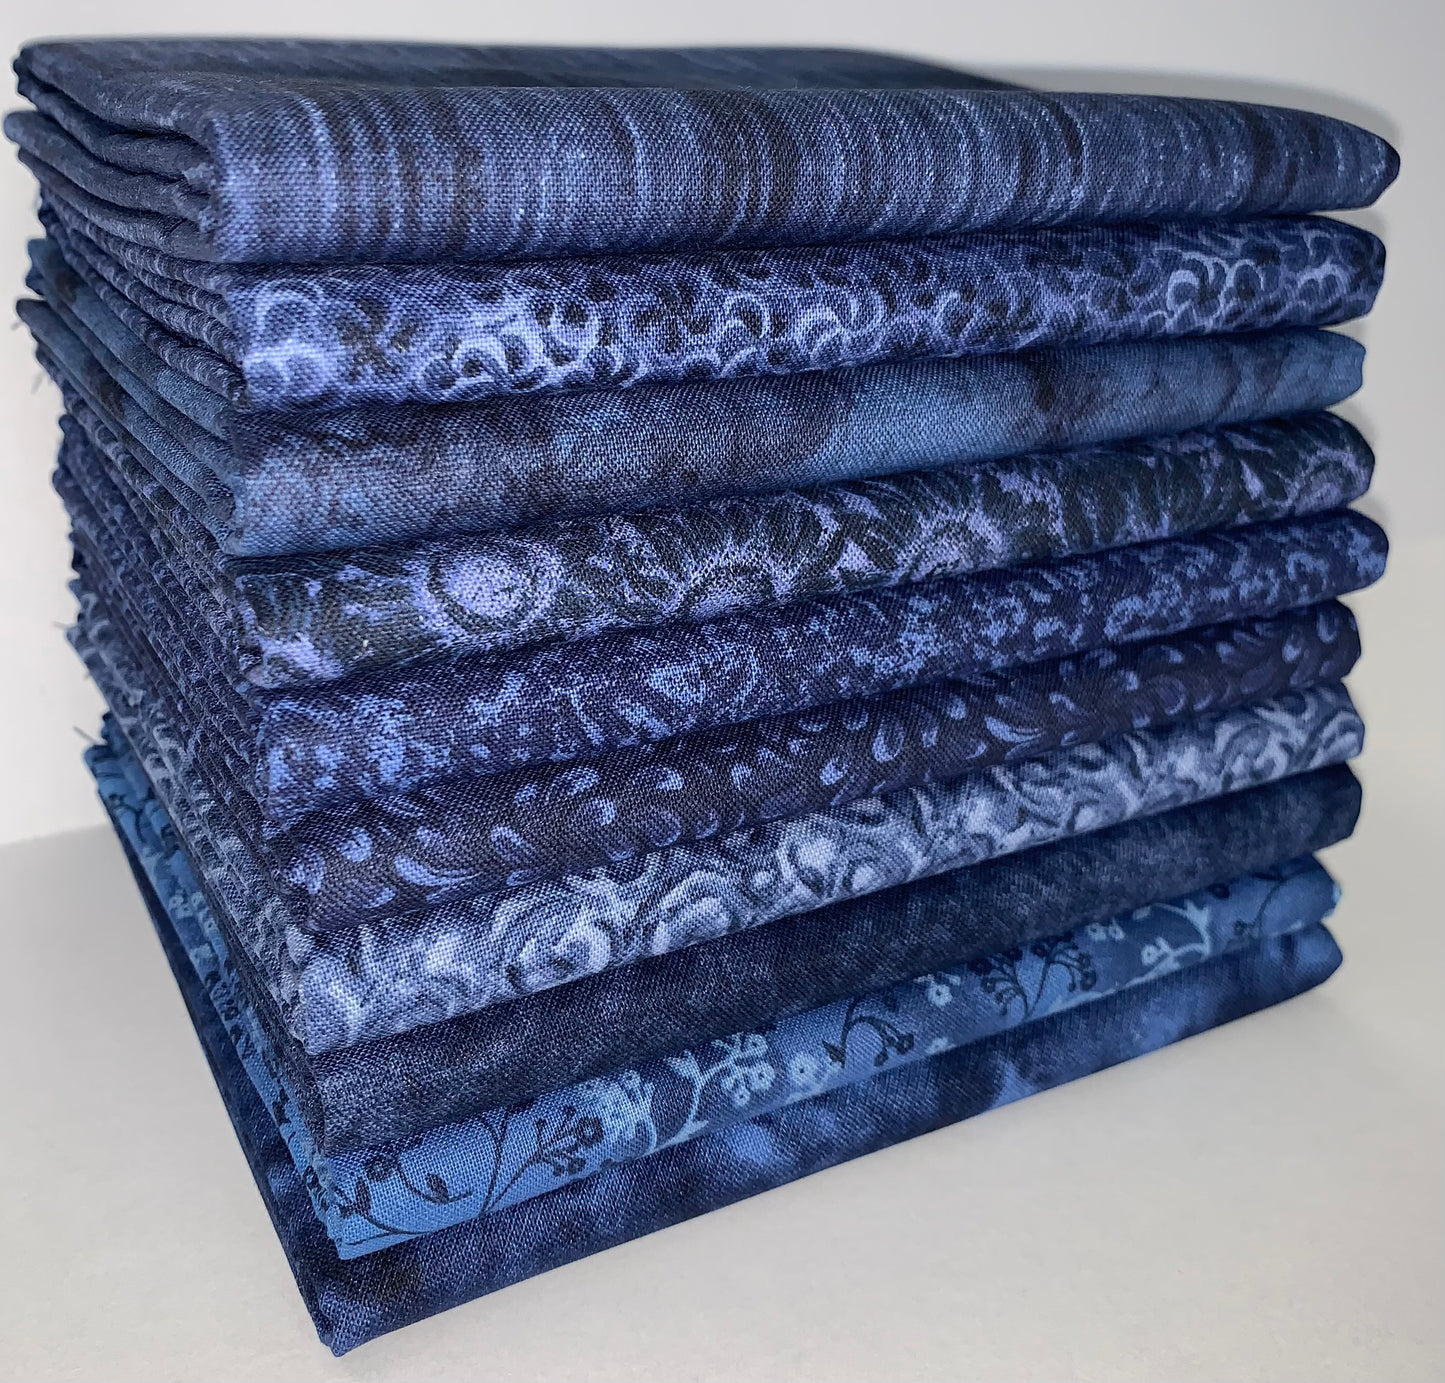 Basic Colors - Dark Blue Half-yard Bundle - 10 Fabrics, 5 Total Yards